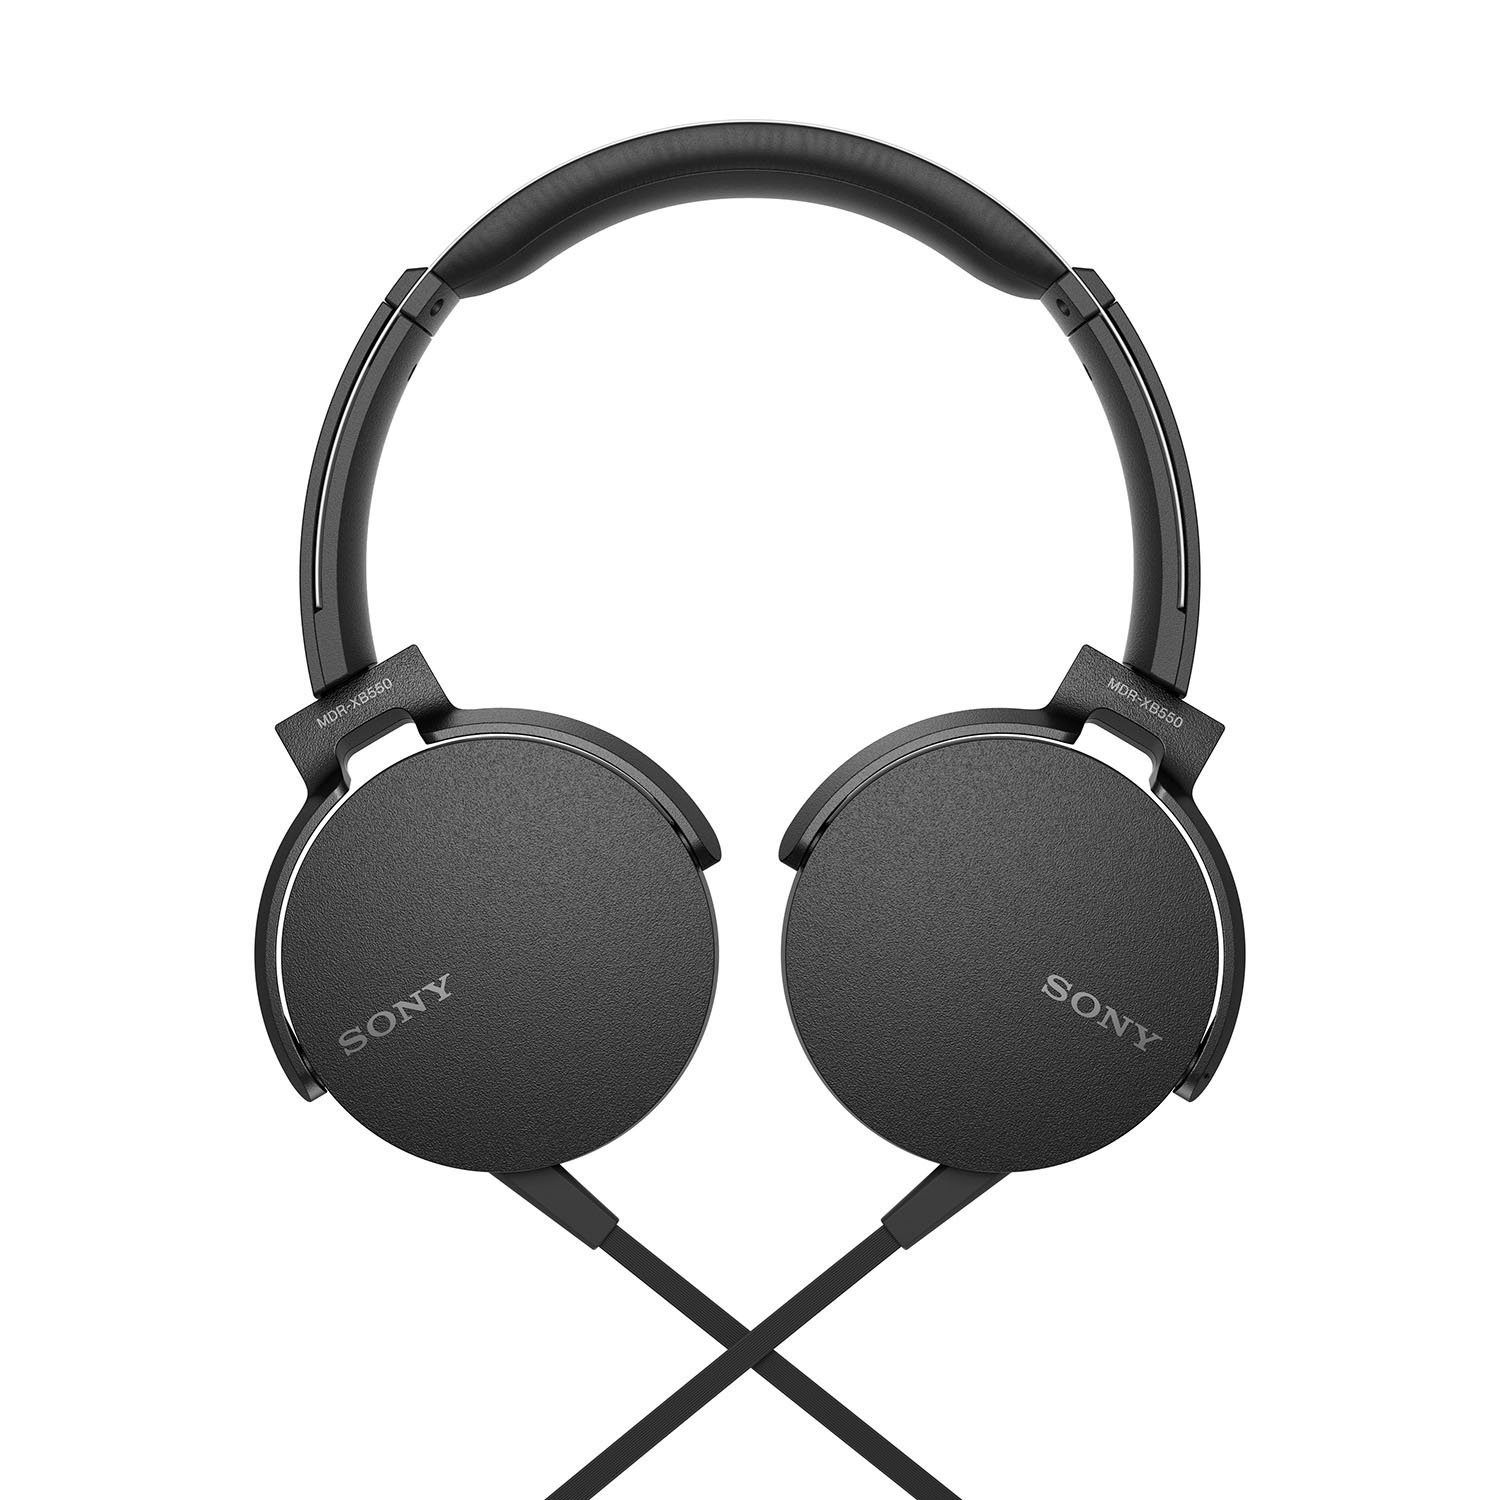 Sony Extra Bass MDR-XB550AP On-Ear Headphones, Black